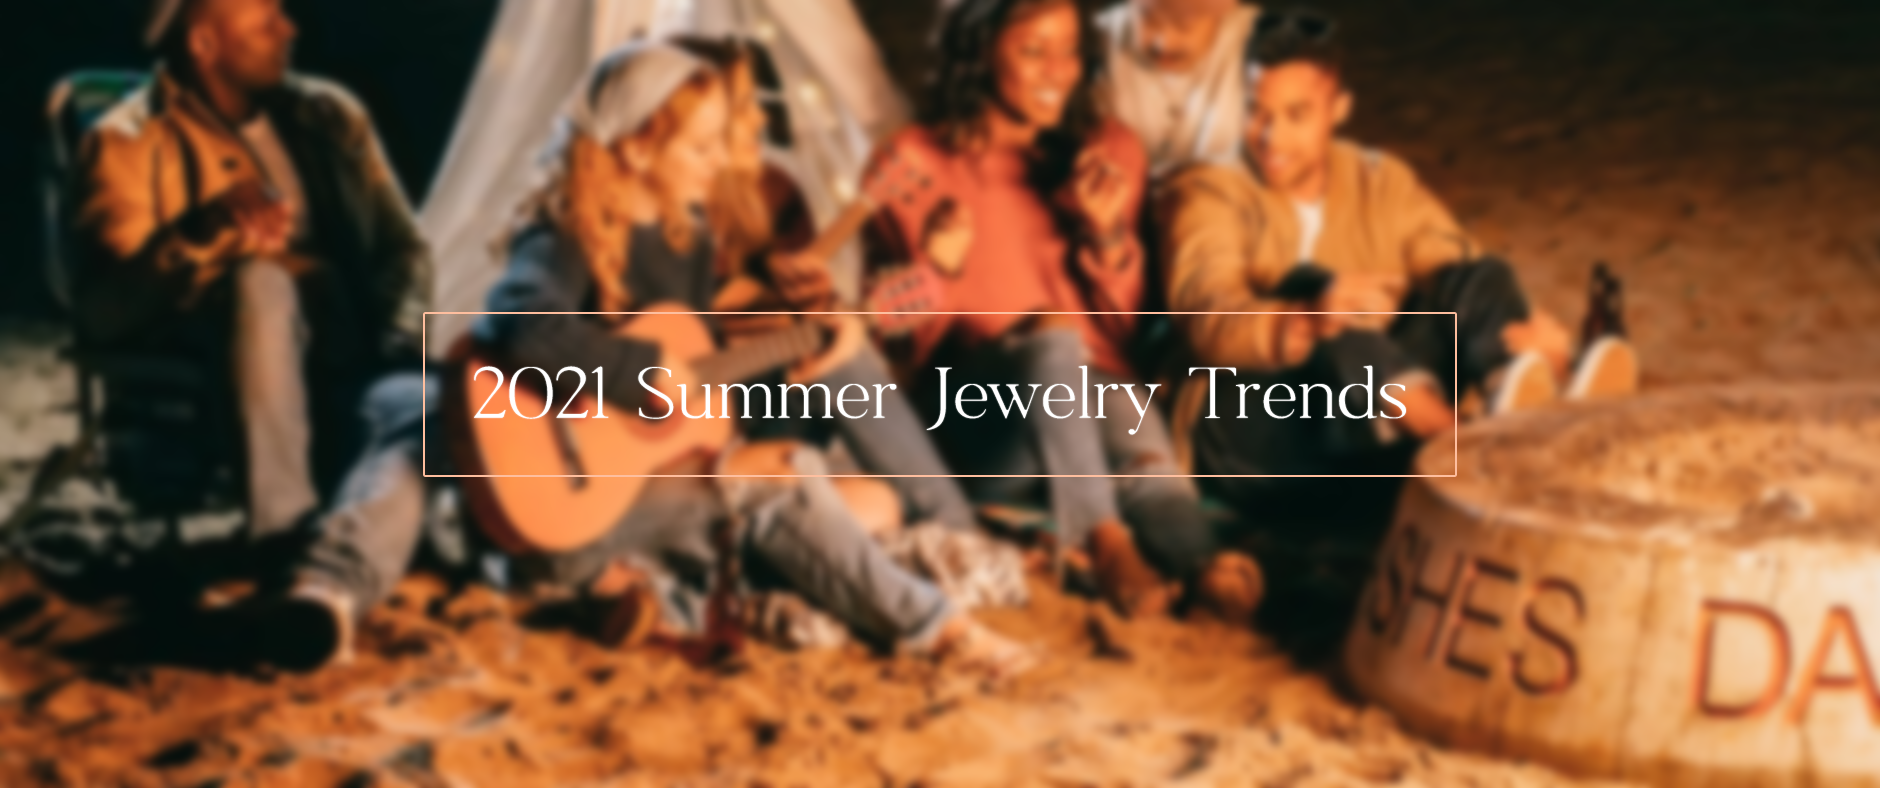 2021 Summer Jewelry Trends